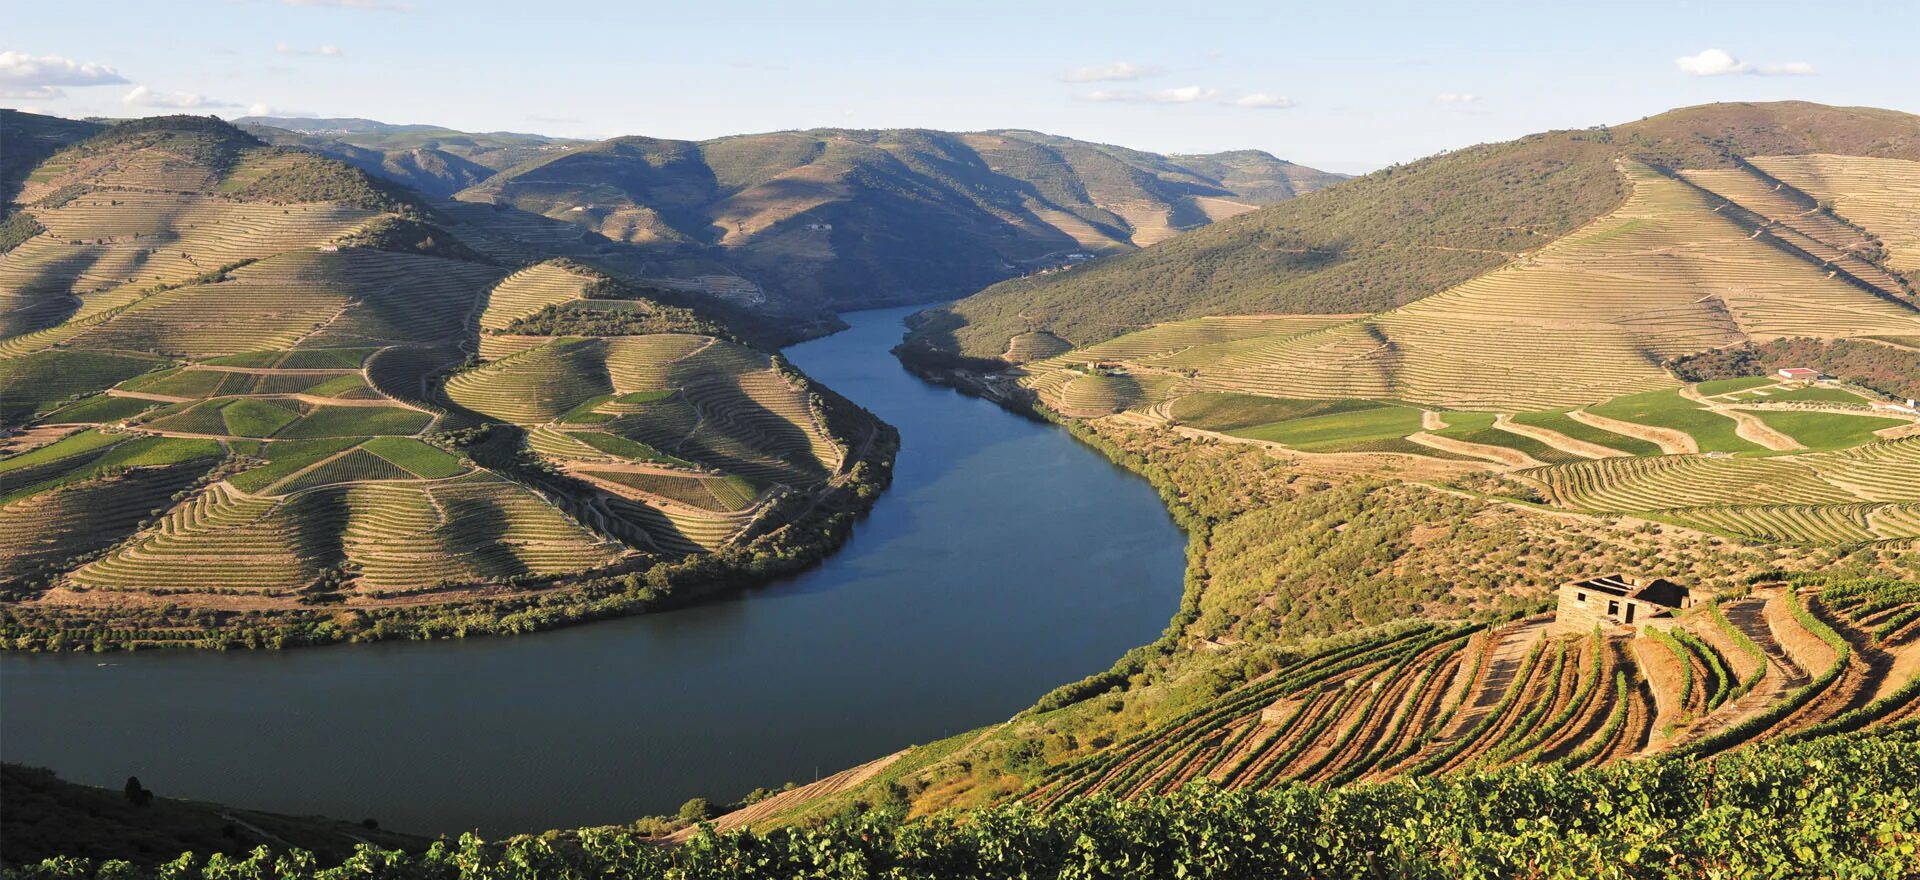 Долина реки Дуэро. Река Дуэро в Португалии. Река Доуро Португалия. Река Дуэро в Испании. Почвы долины рек